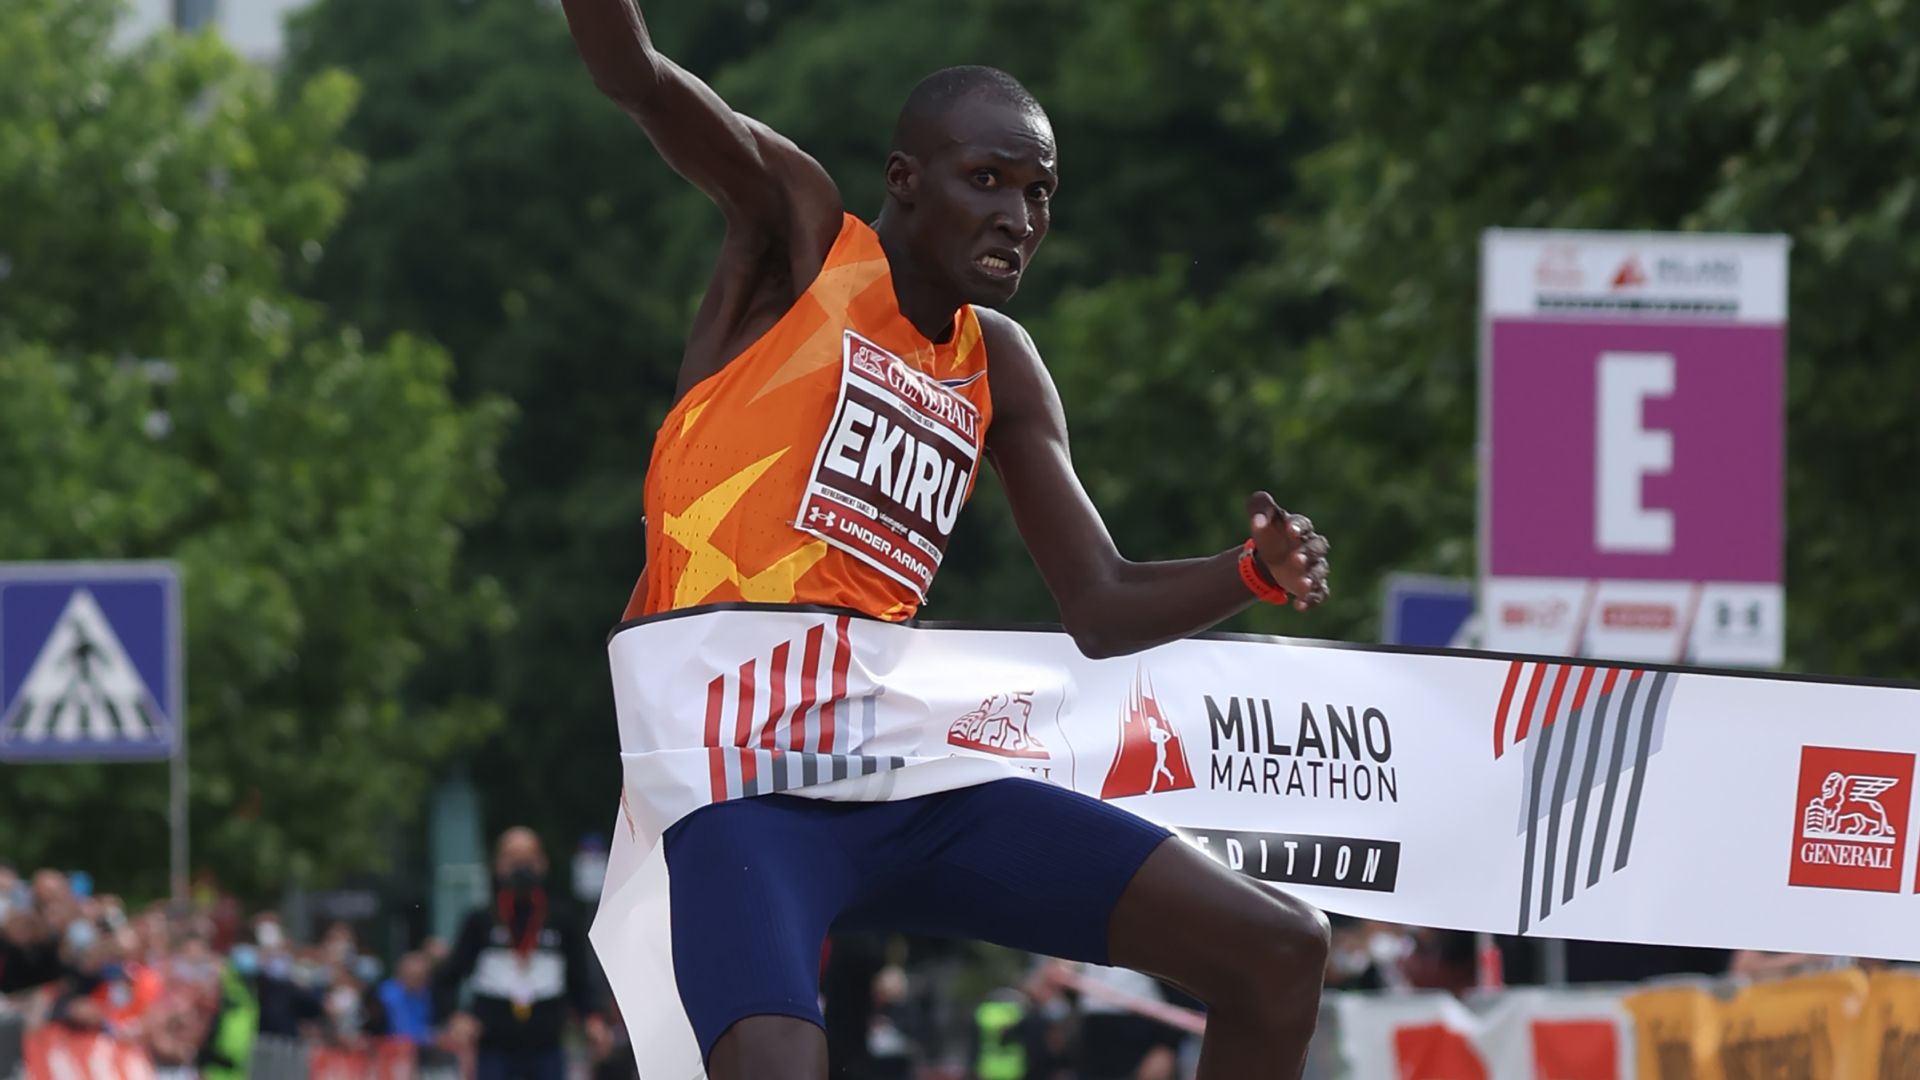 World’s Fastest Man Of 2021 To Participate At The ADNOC Abu Dhabi Marathon